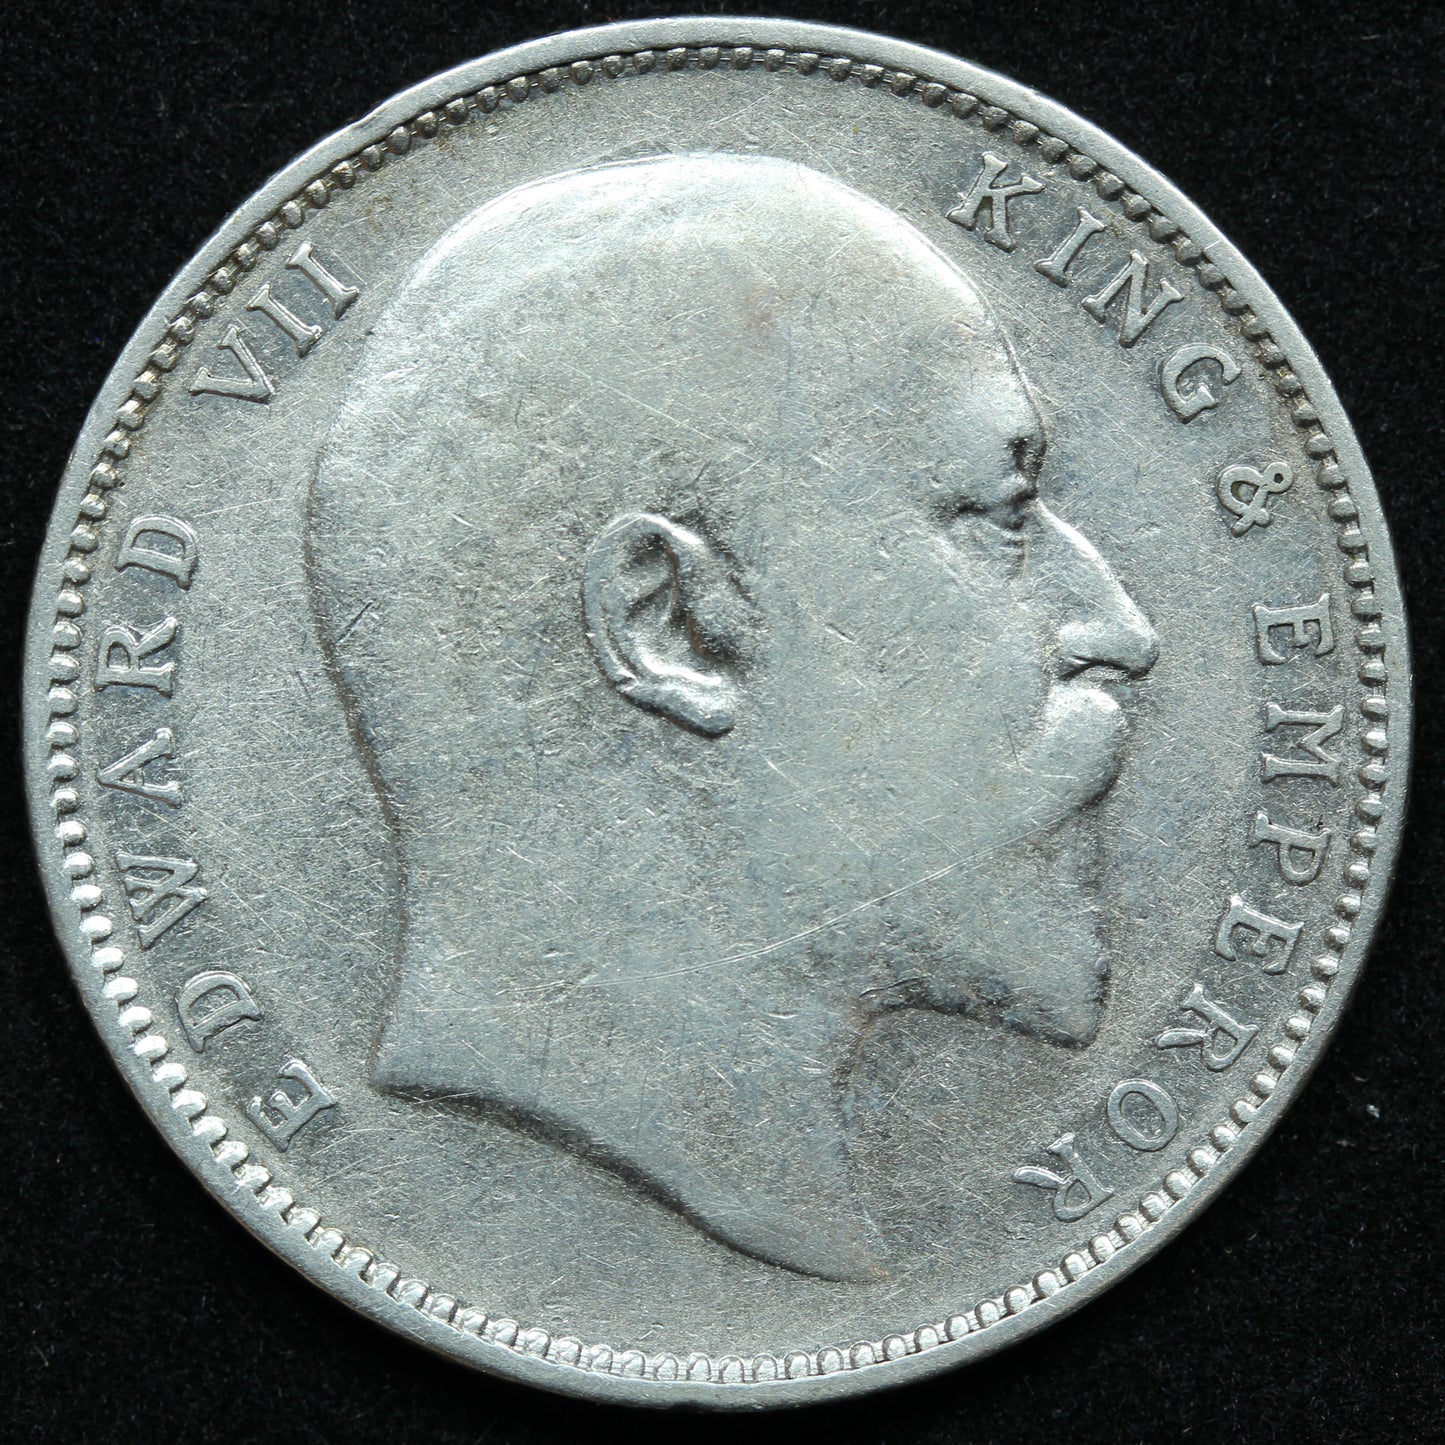 1903 India-British Silver 1 Rupee Coin - Edward VII - KM #508